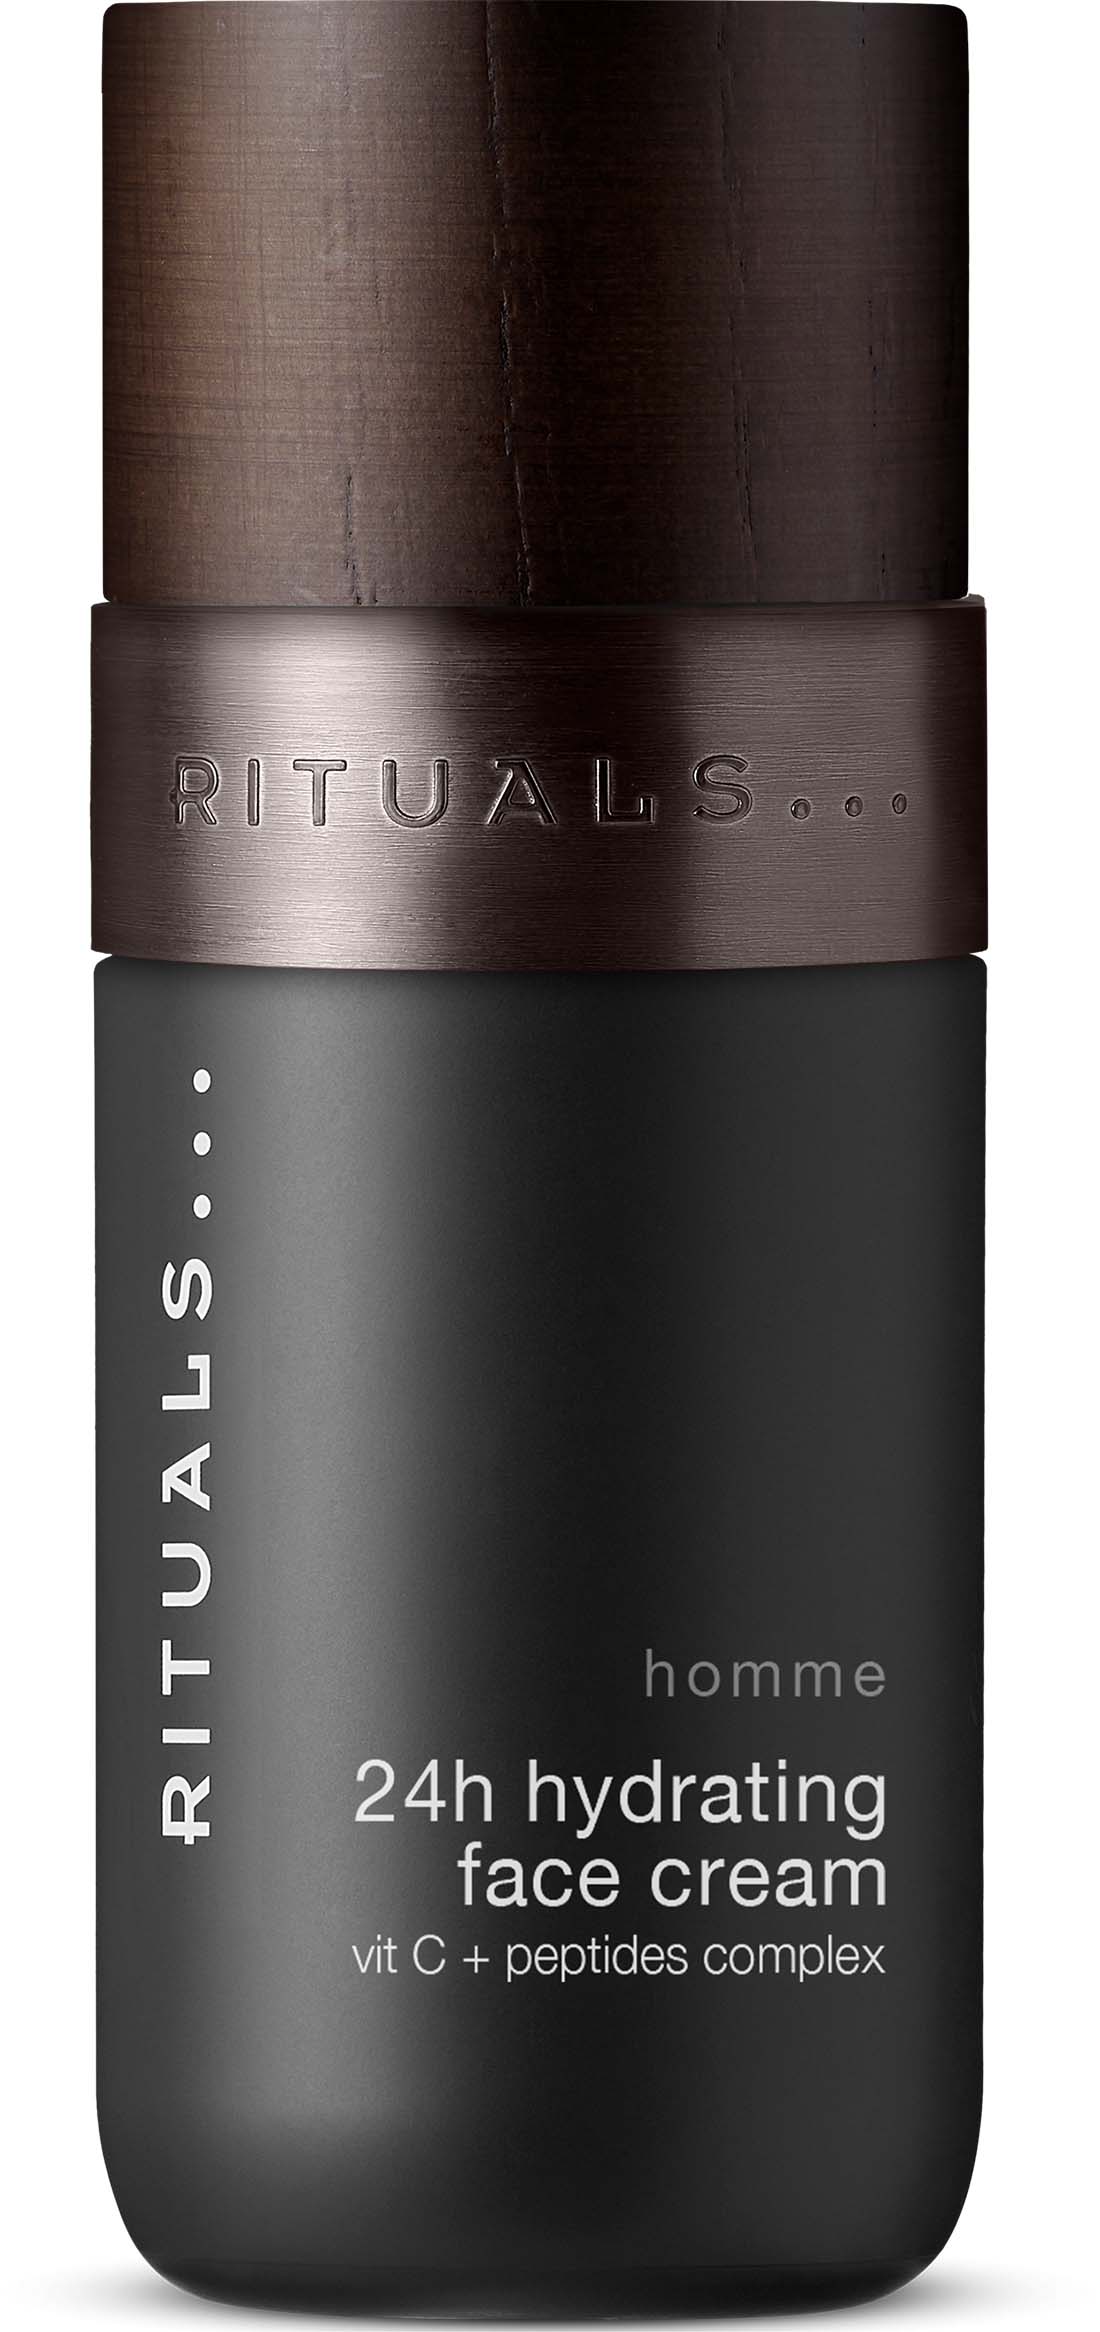 RITUALS® Homme - Refill hydrating gel cream - 50 ml